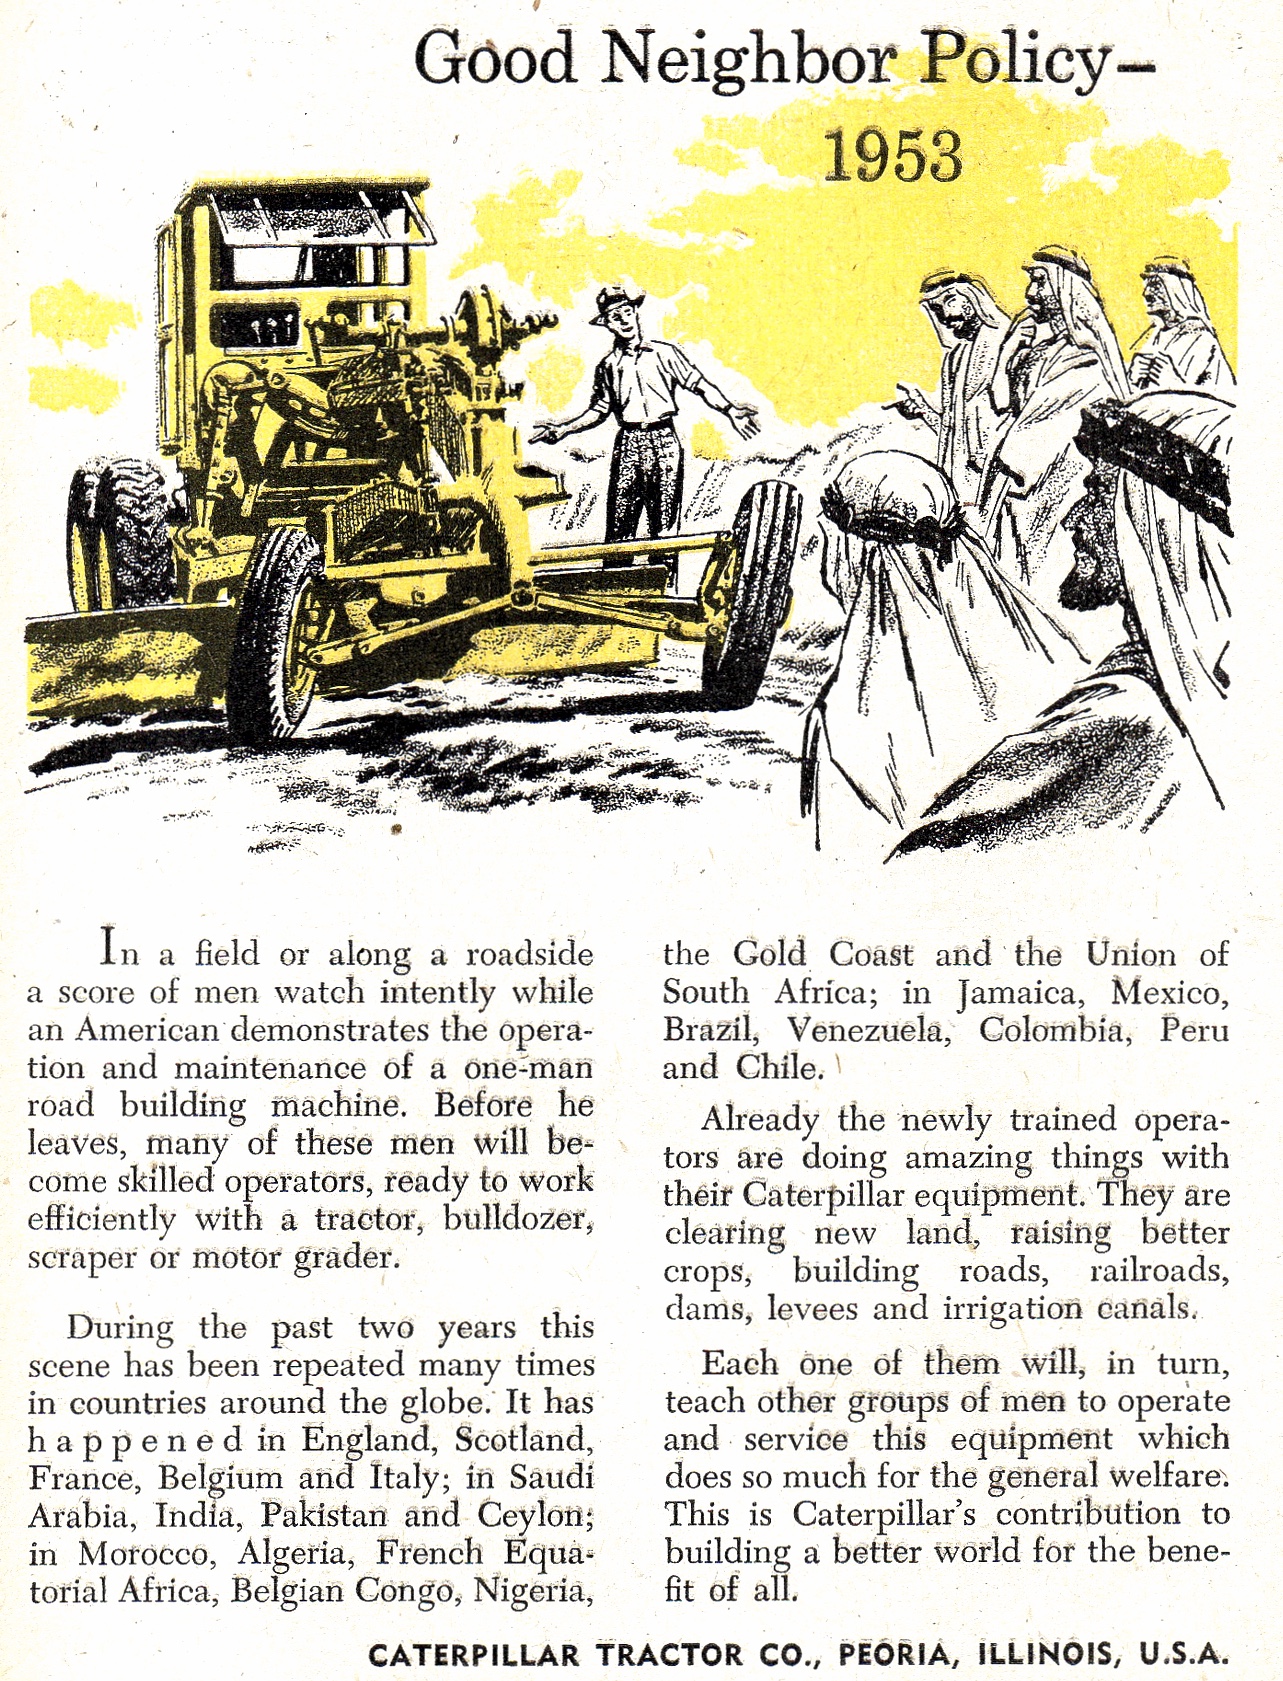 1953 Caterpillar Tractor Co Good Neighbor Policy